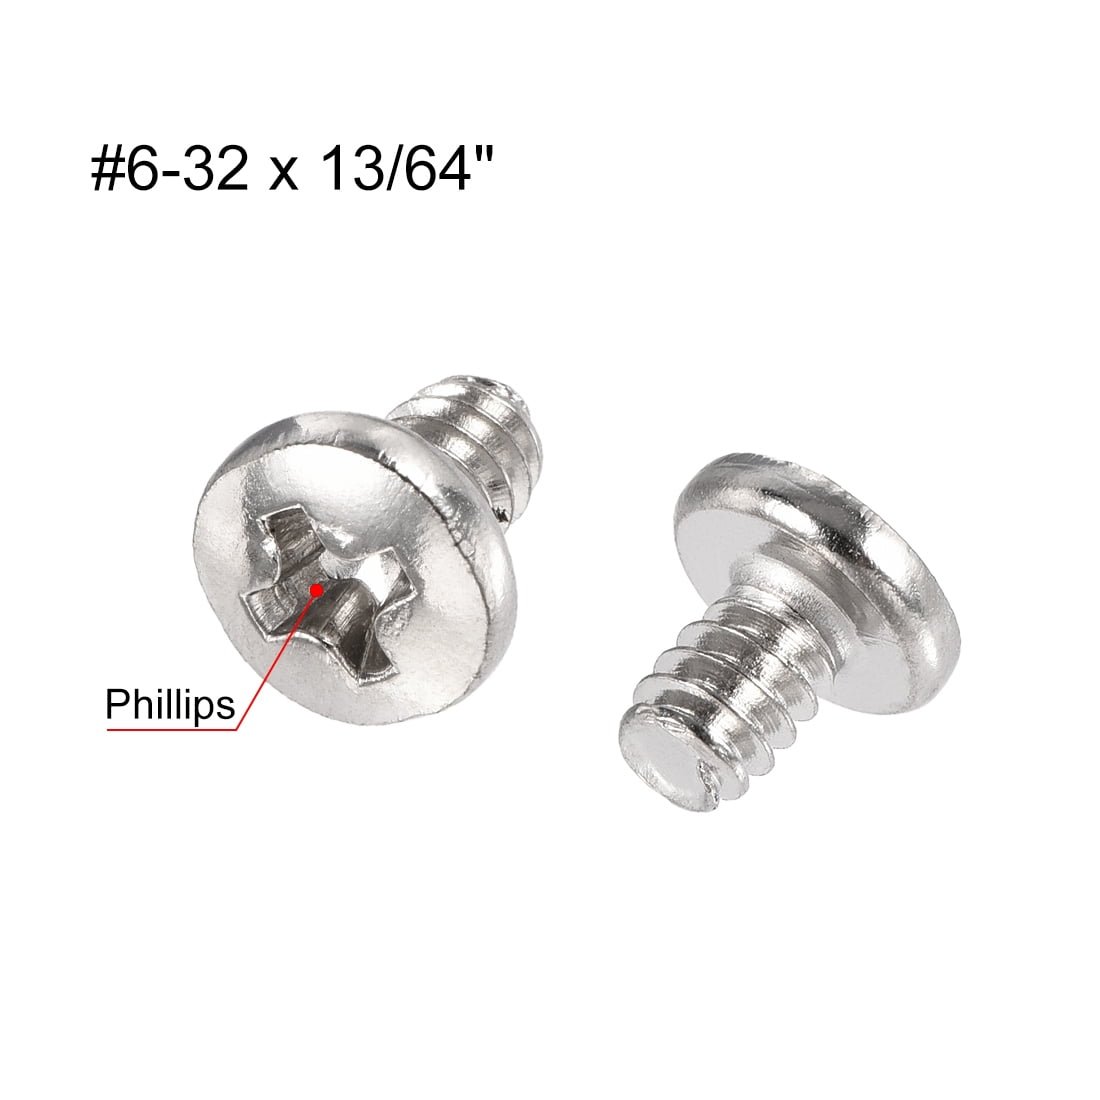 #6-32 x 13/64" Phillips Pan Head Screw Fastener Silver Tone 120pcs